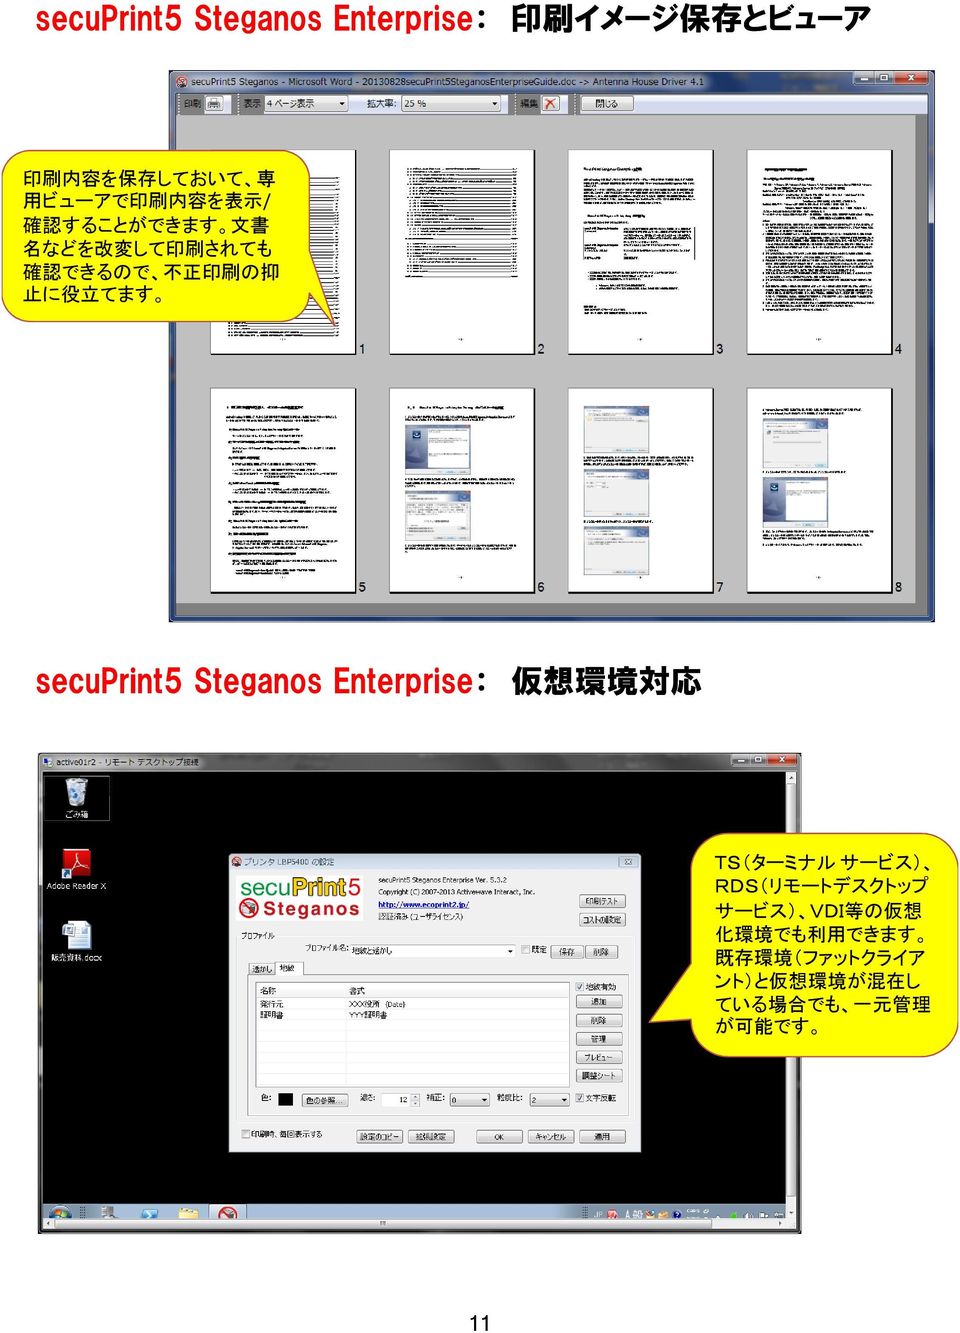 secuprint5 Steganos Enterprise: 仮 想 環 境 対 応 TS(ターミナル サービス) RDS(リモートデスクトップ サービス) VDI 等 の